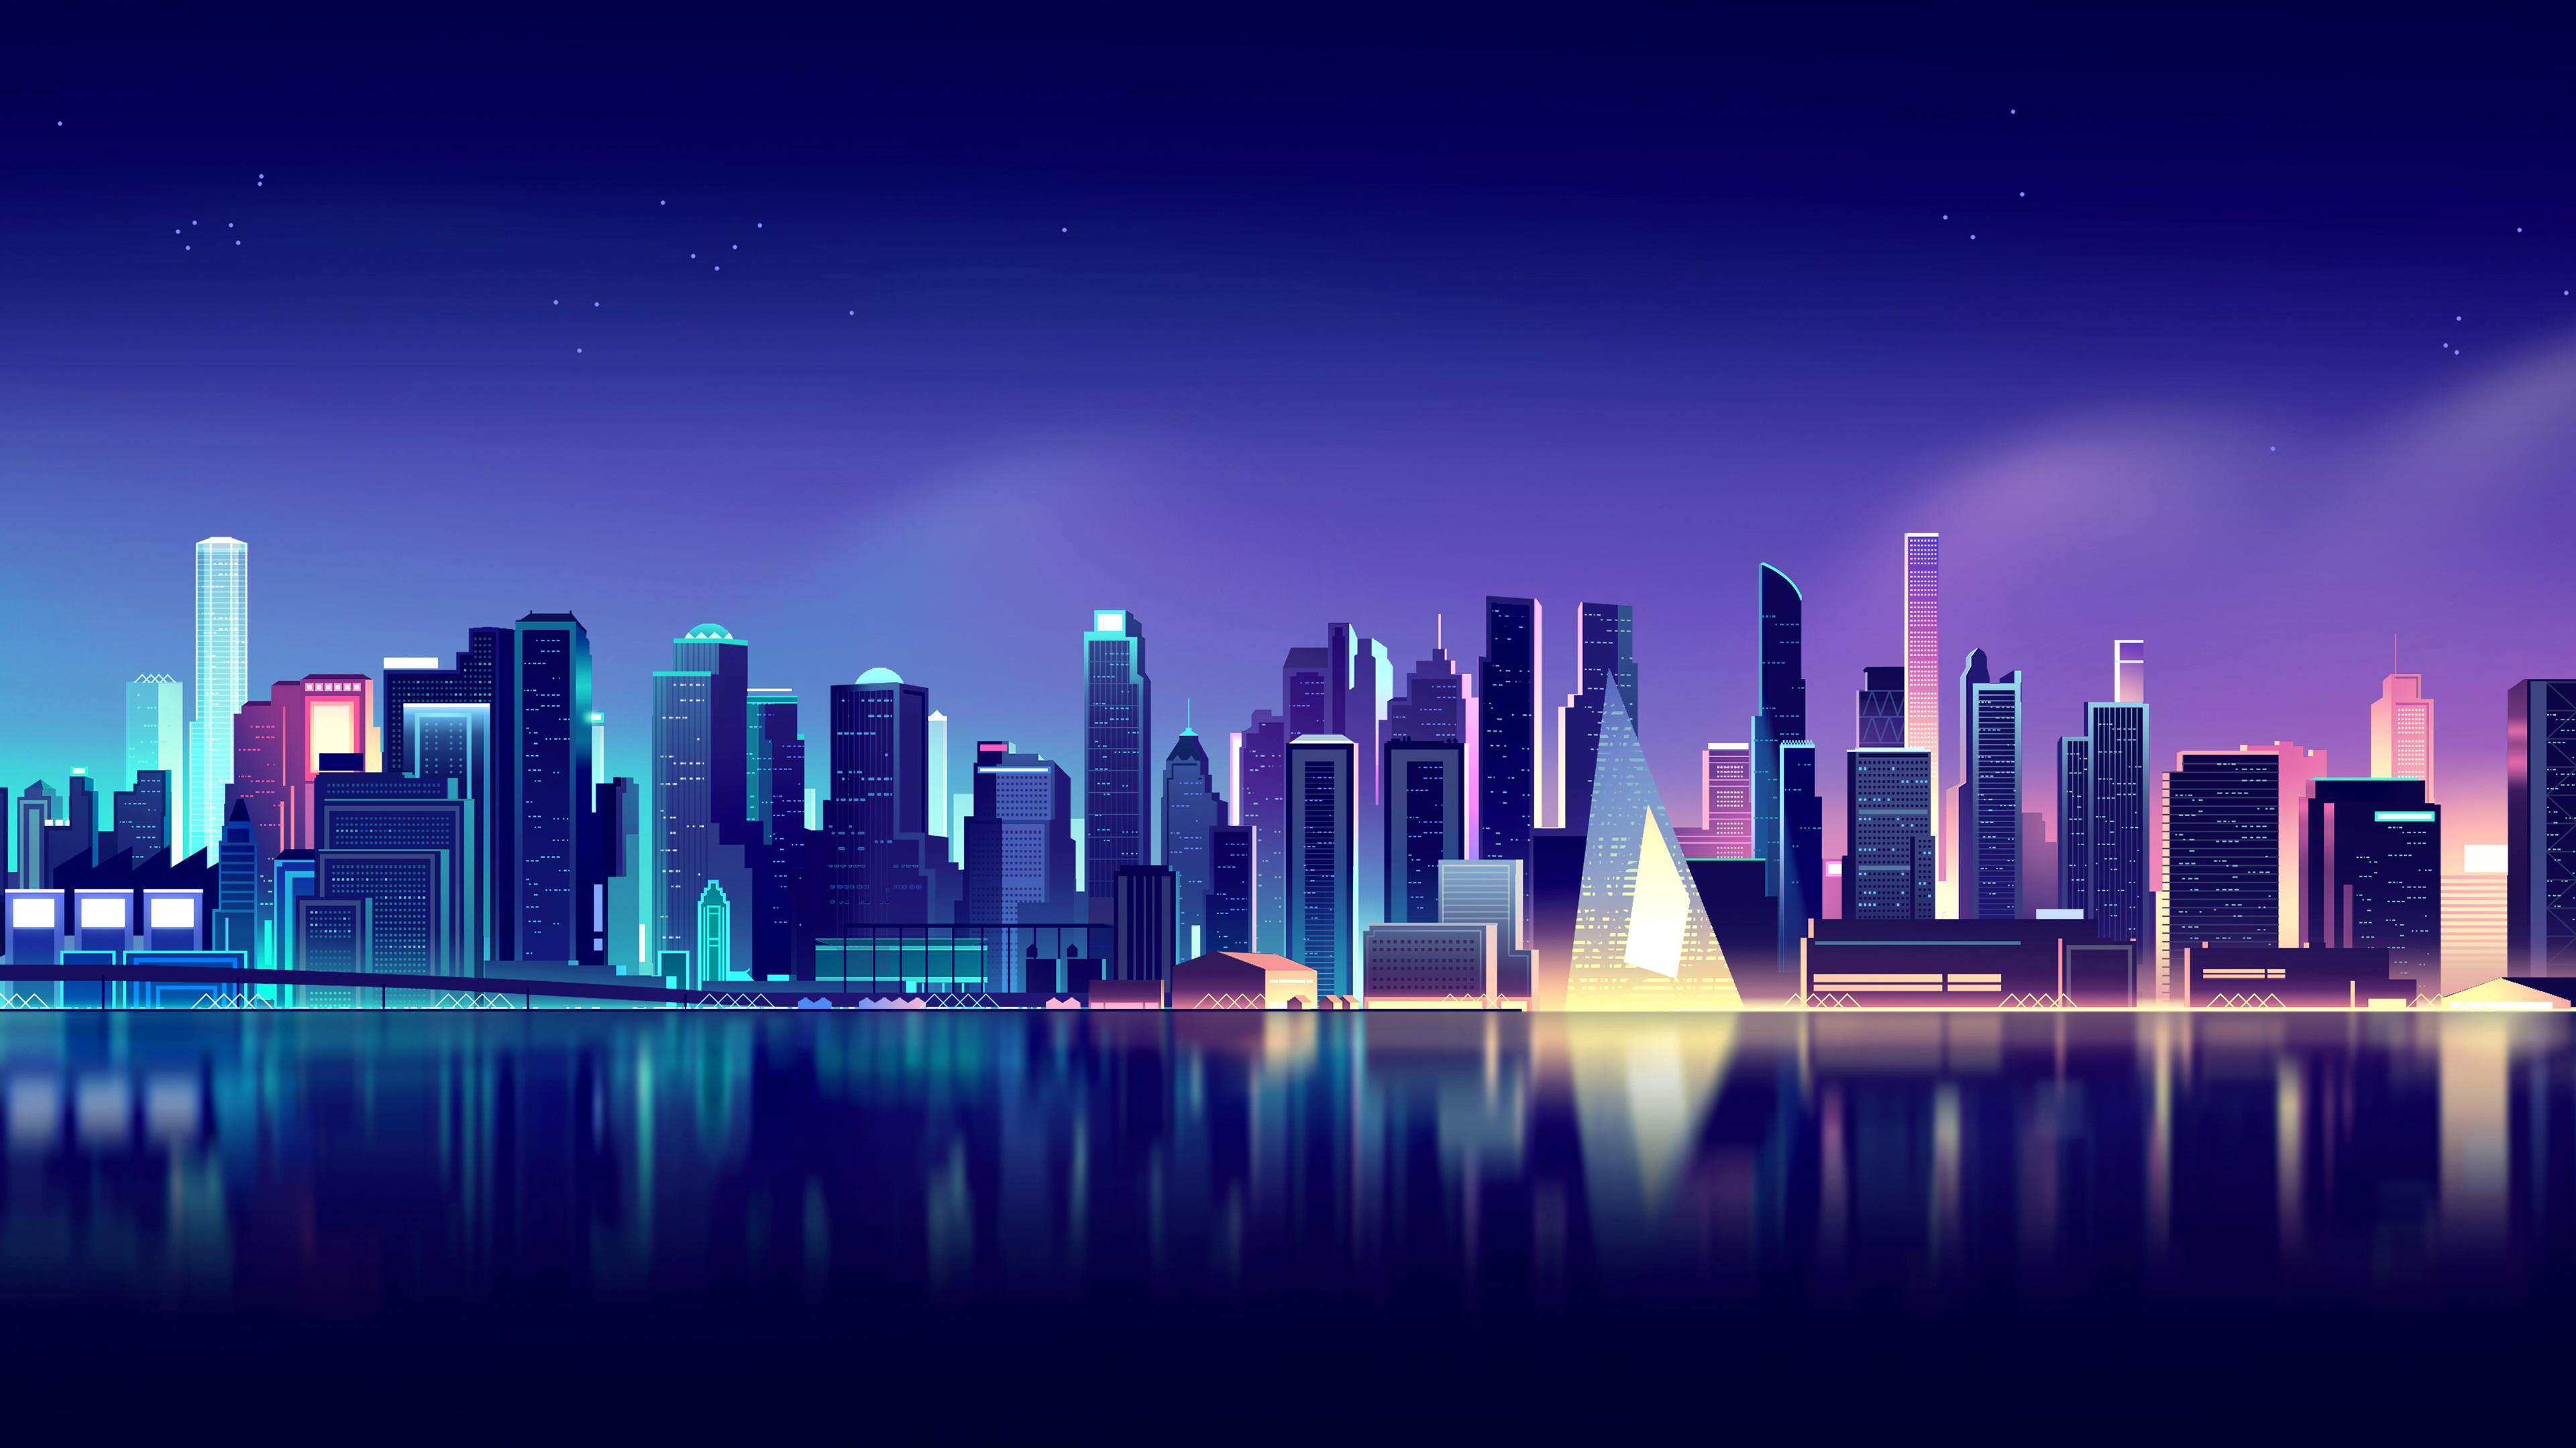 Neon City Skyline Cityscape Digital Art Landscape 4k Wallpaper